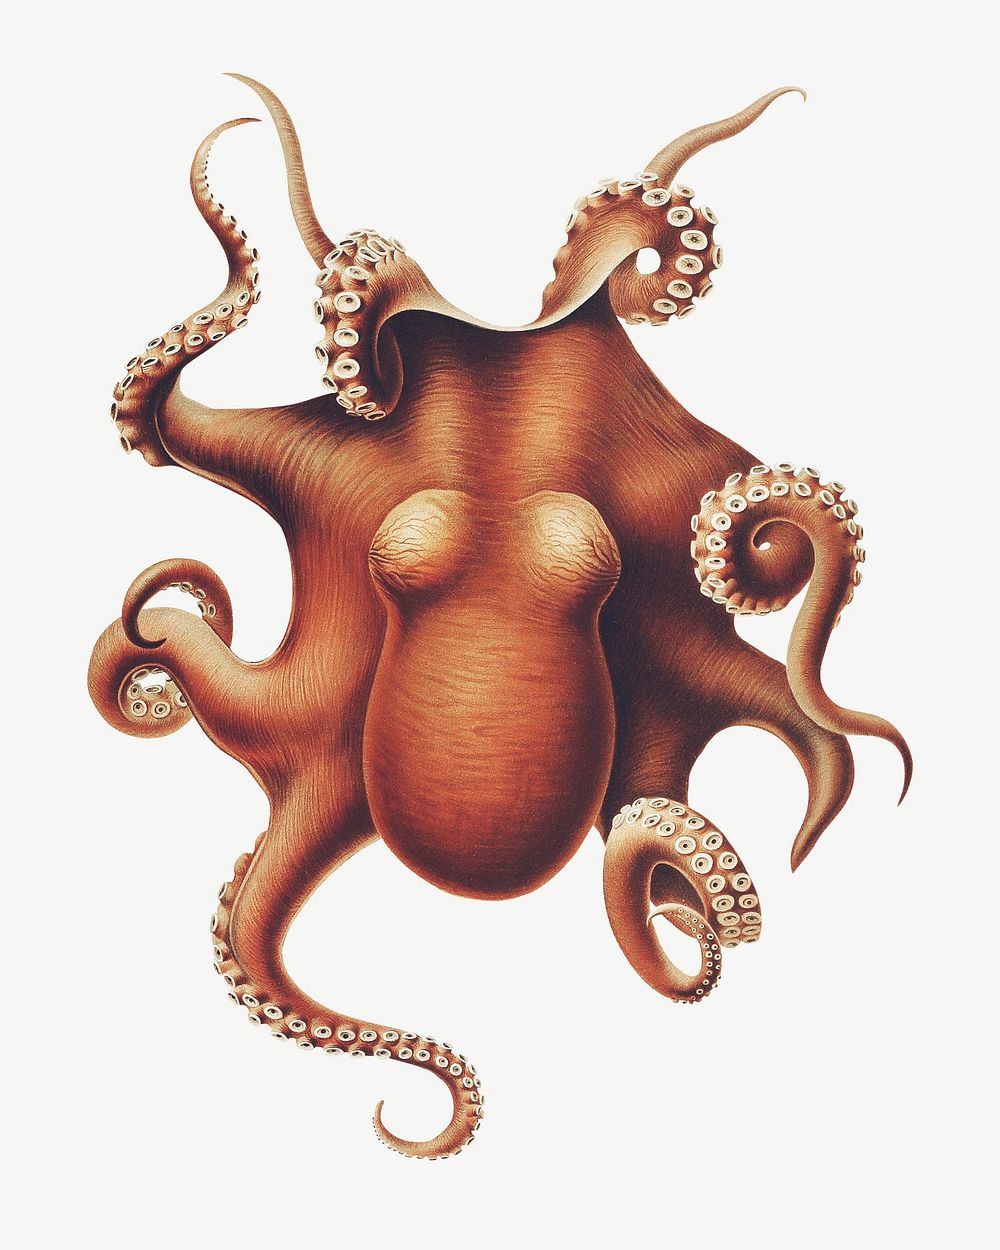 Octopus vintage illustration, collage element psd